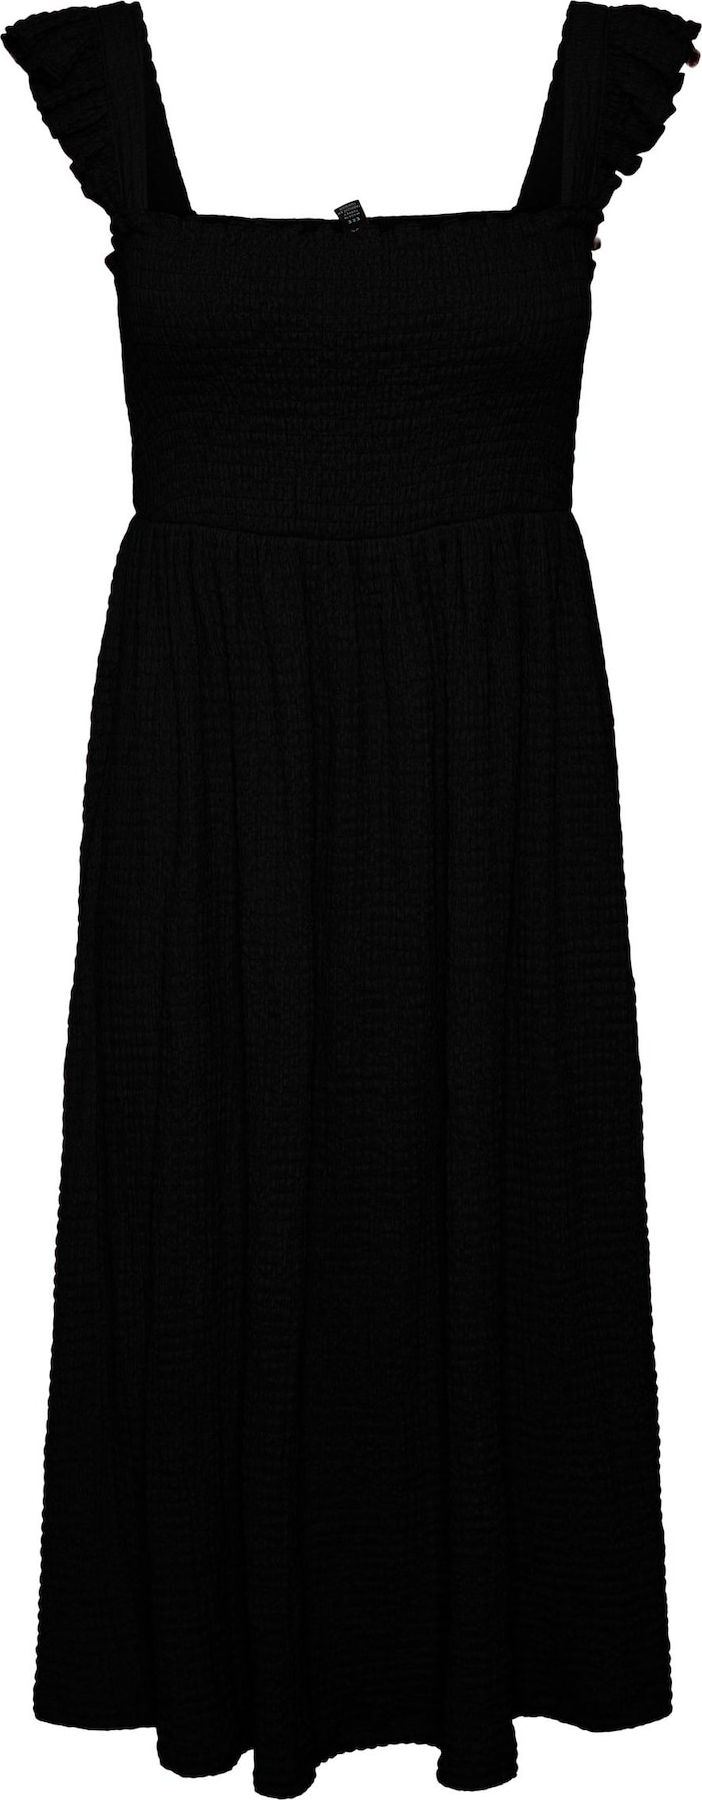 PIECES Letní šaty 'Keegan' černá